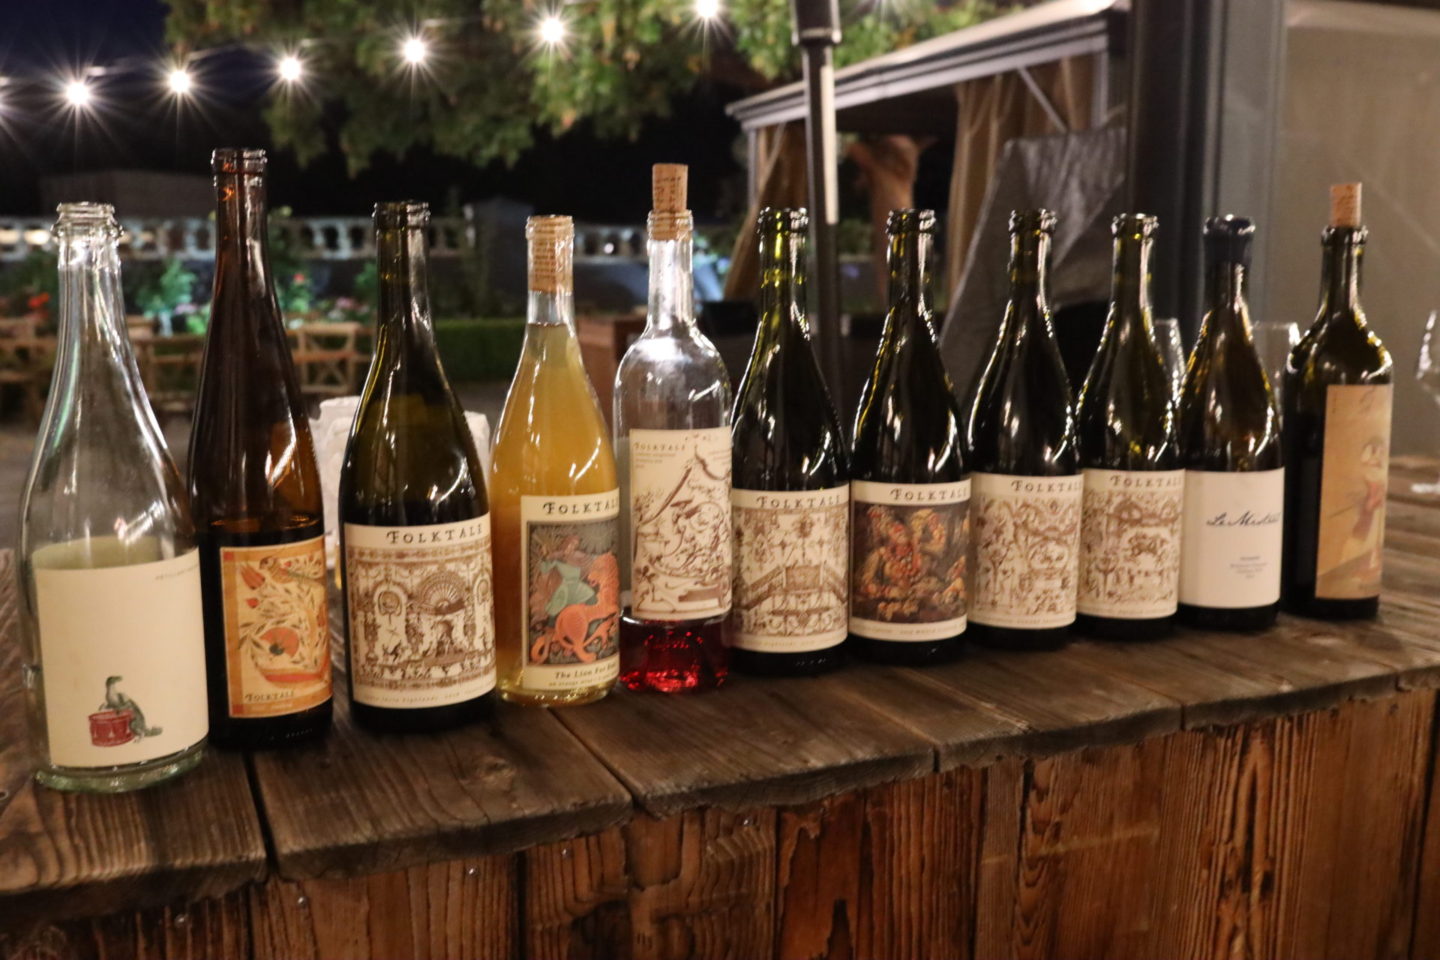 lineup of wine bottles at Folktale Winery